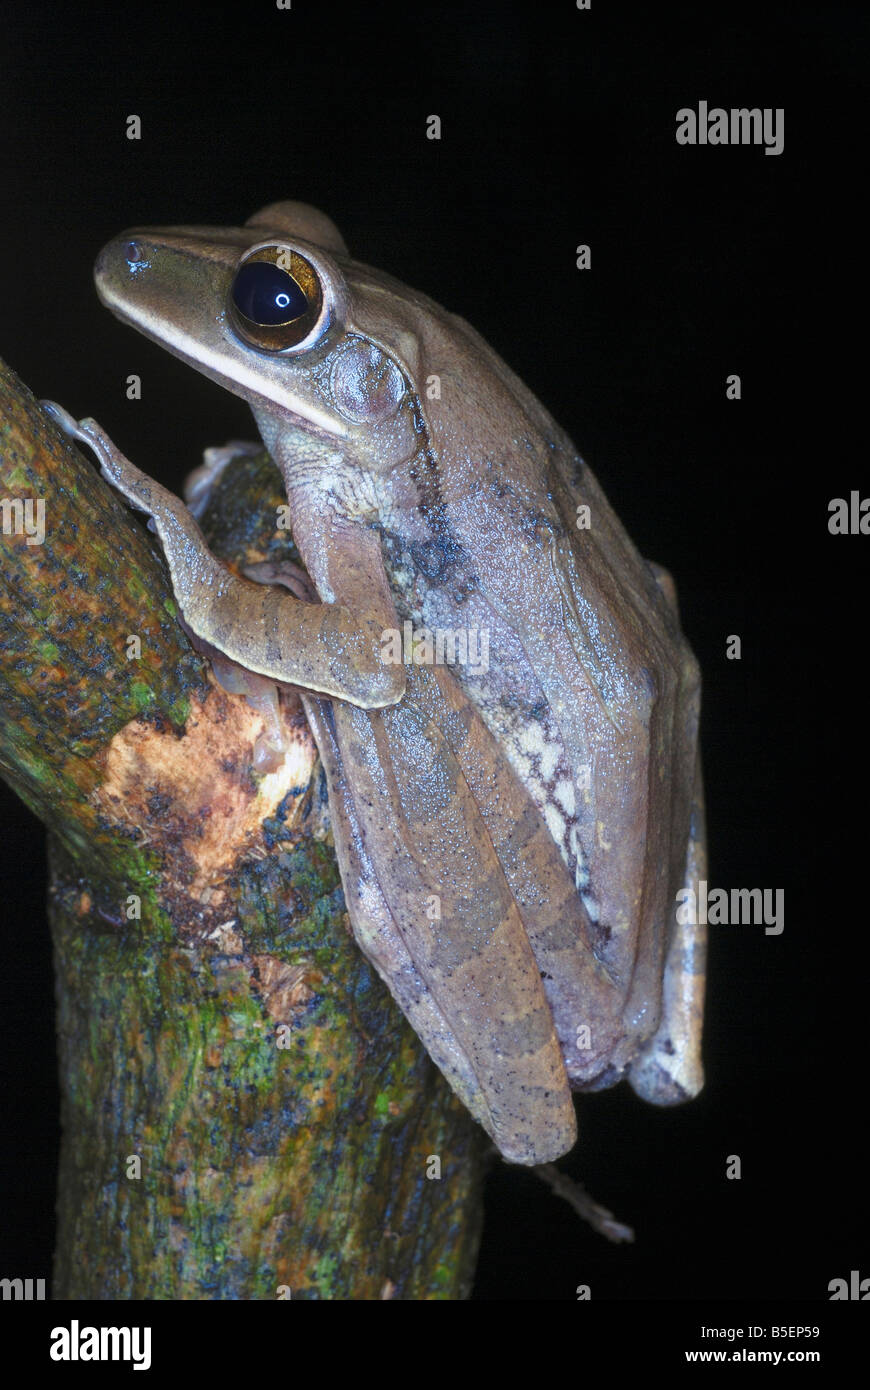 Polypedates leucomastyx. commonly known as Northeastern Tree frog. Stock Photo